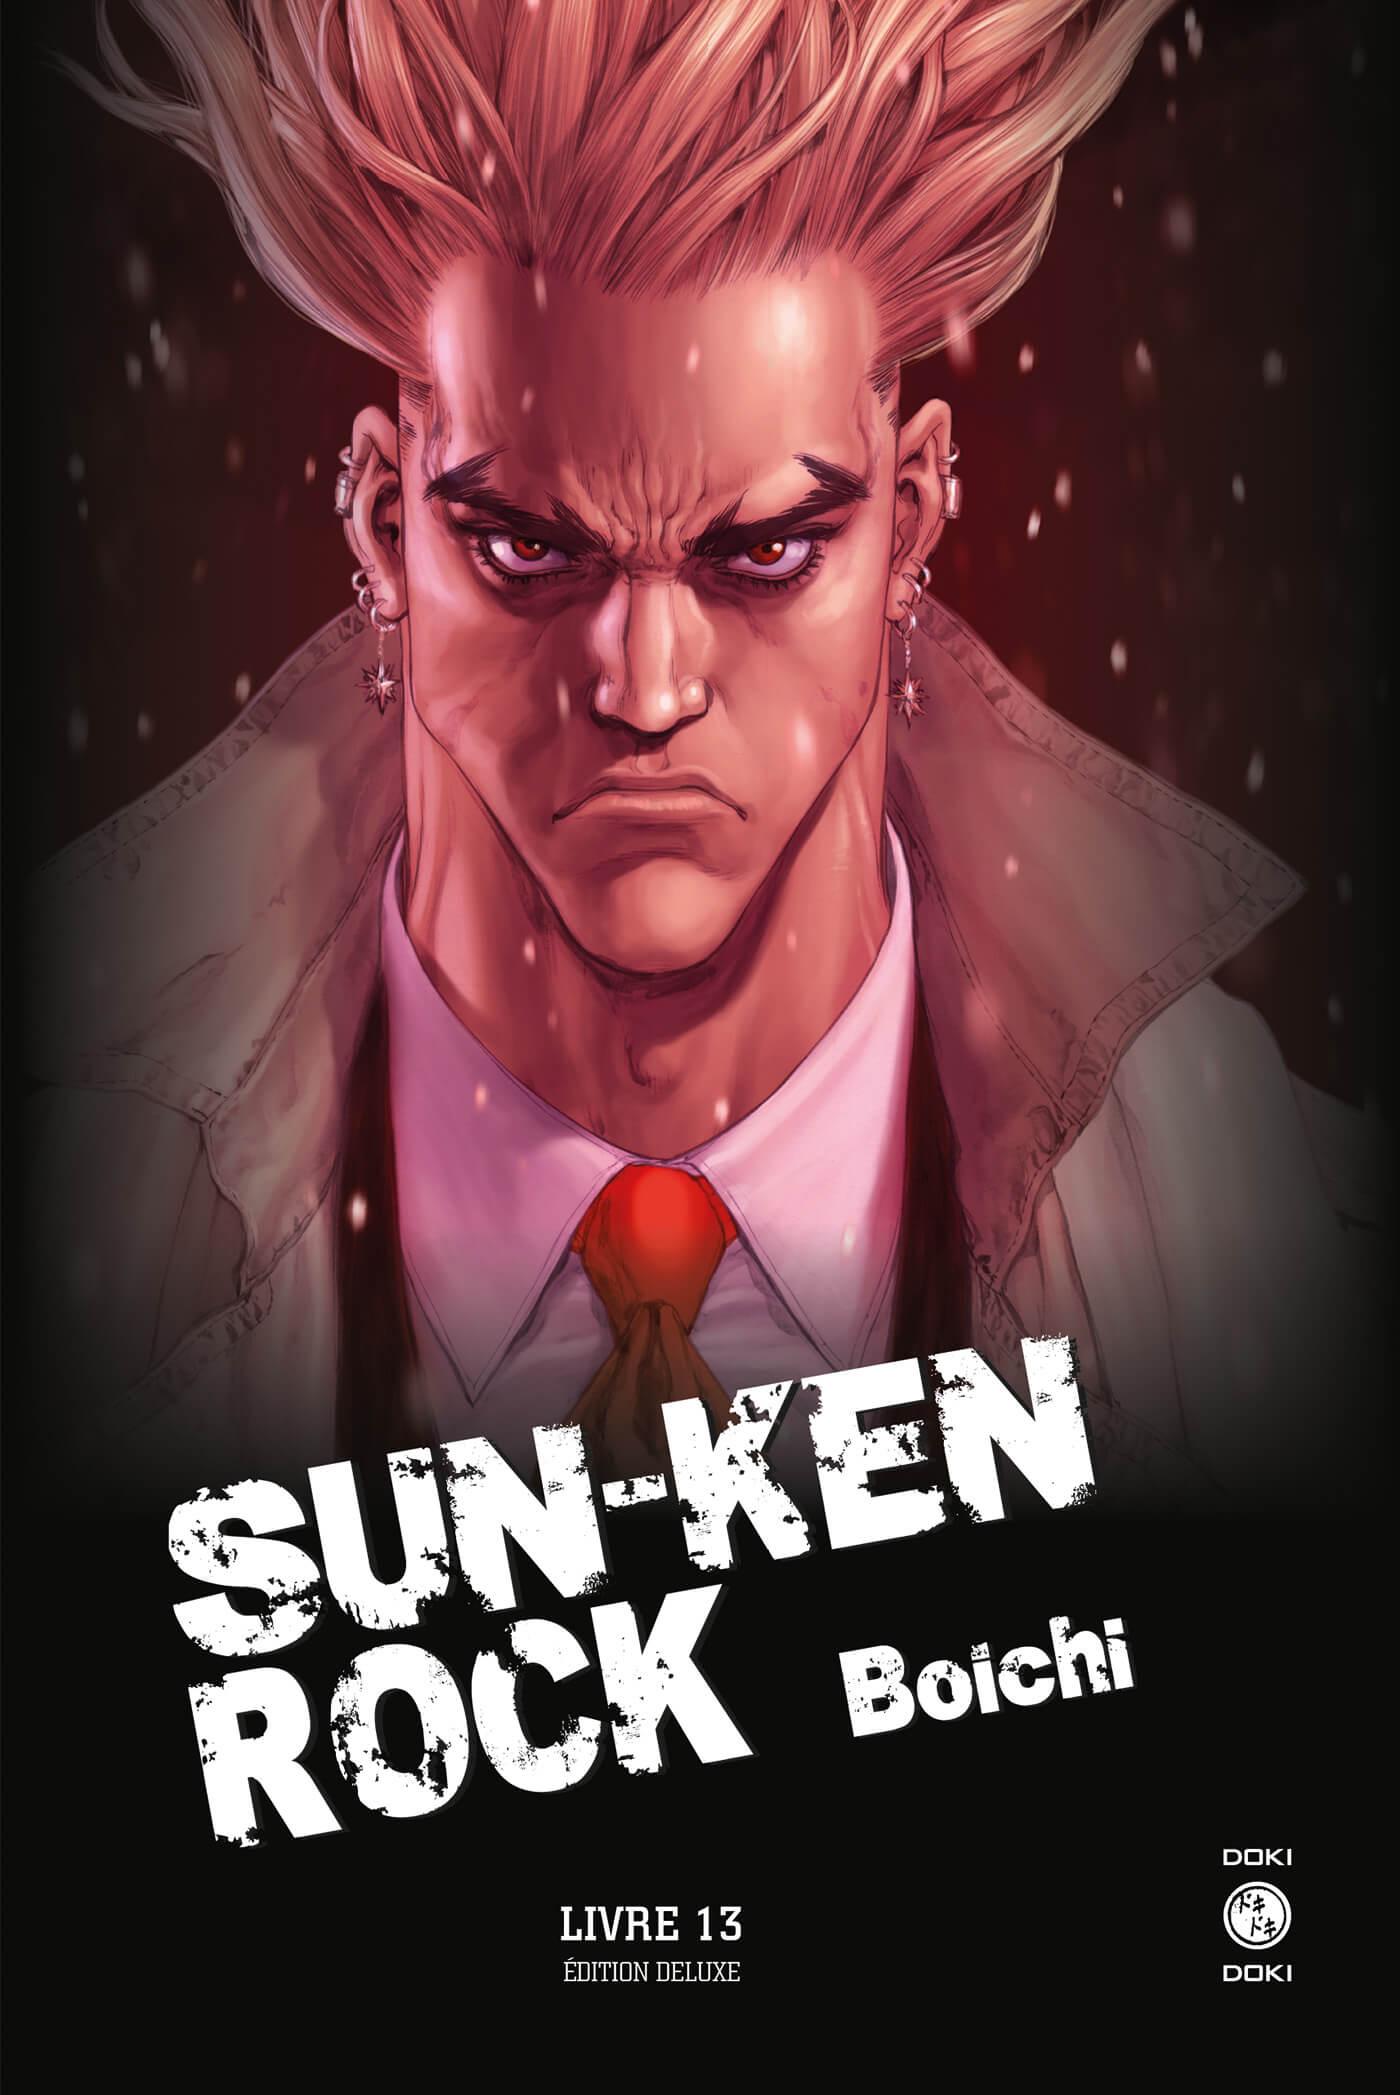 BD Sun-Ken Rock - Ã©dition deluxe